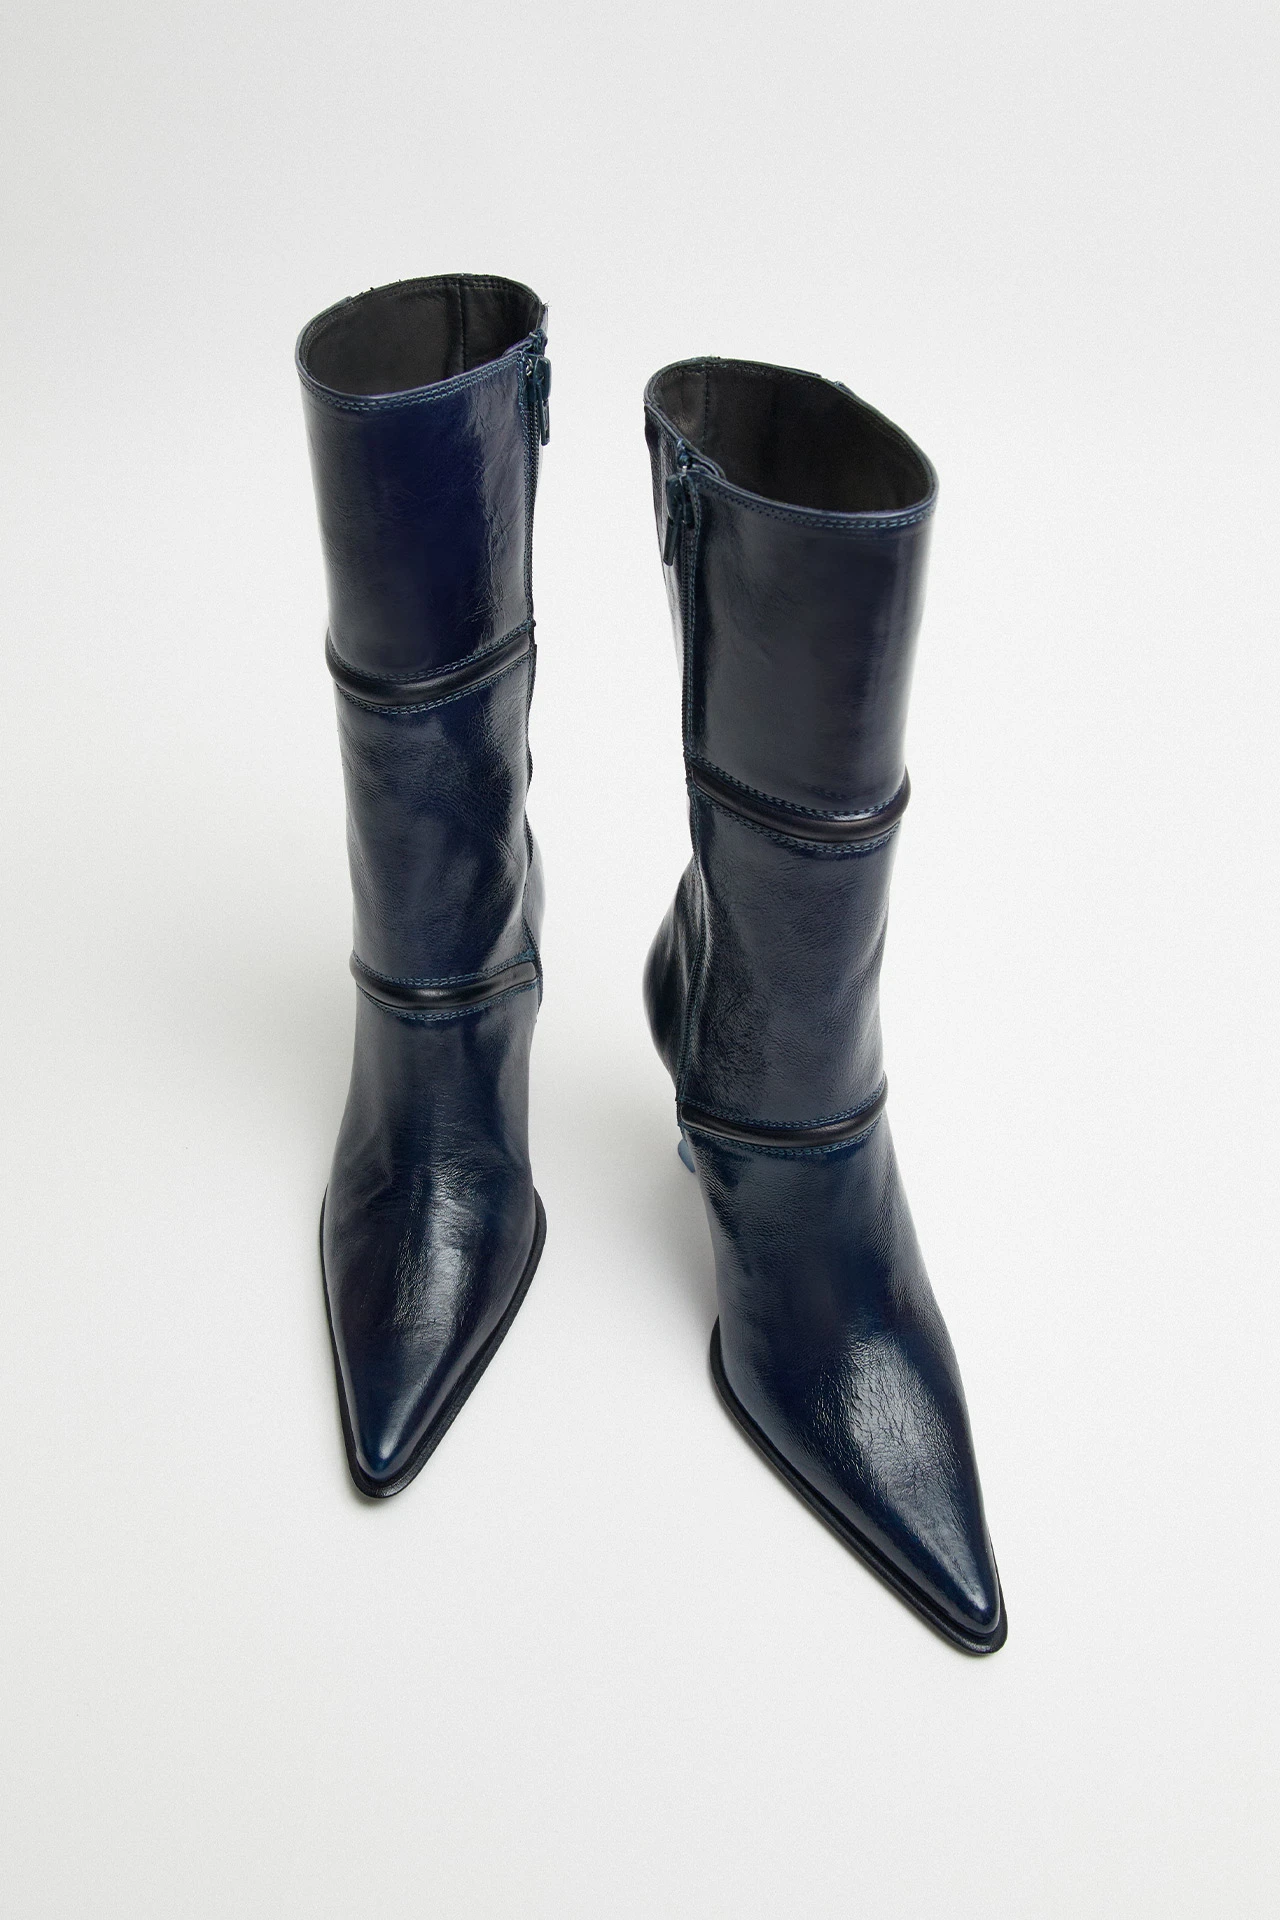 Miista-sander-navy-boots-04